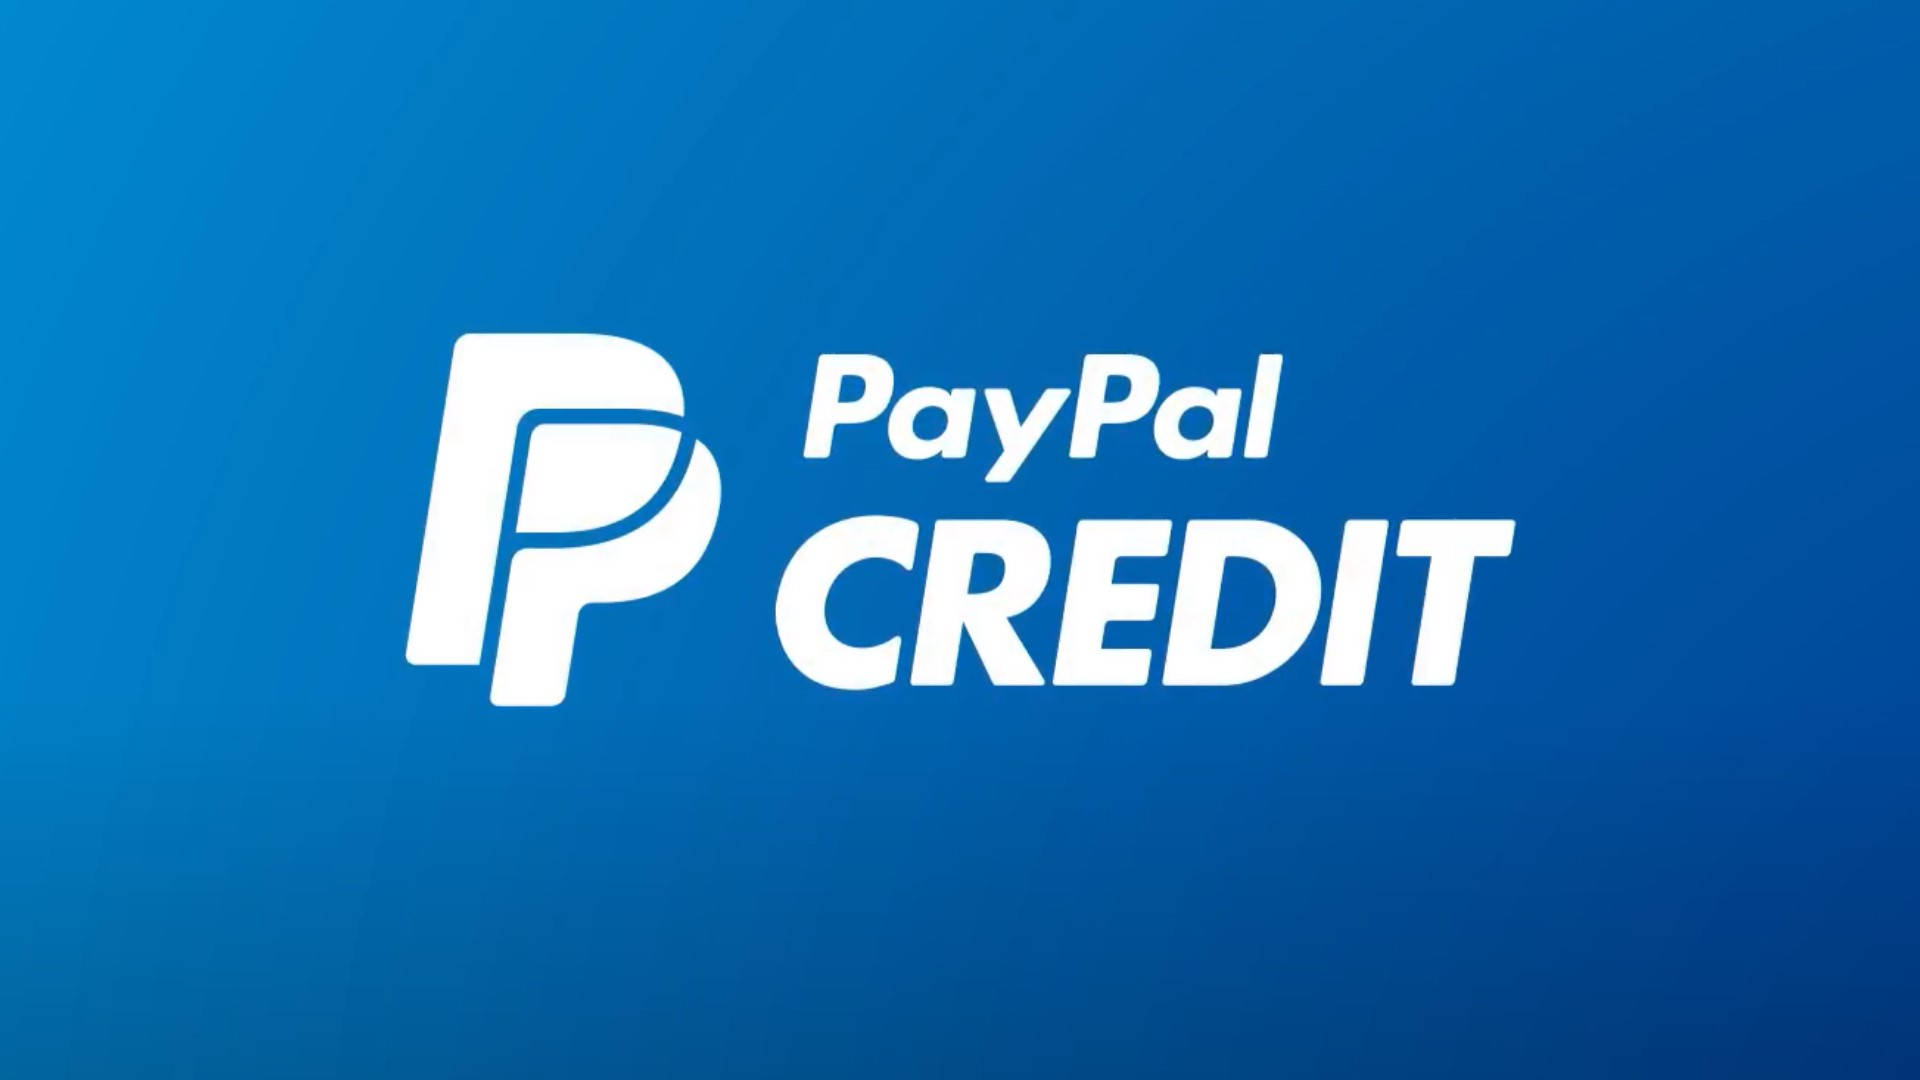 Paypal Credit Logo Wallpaper